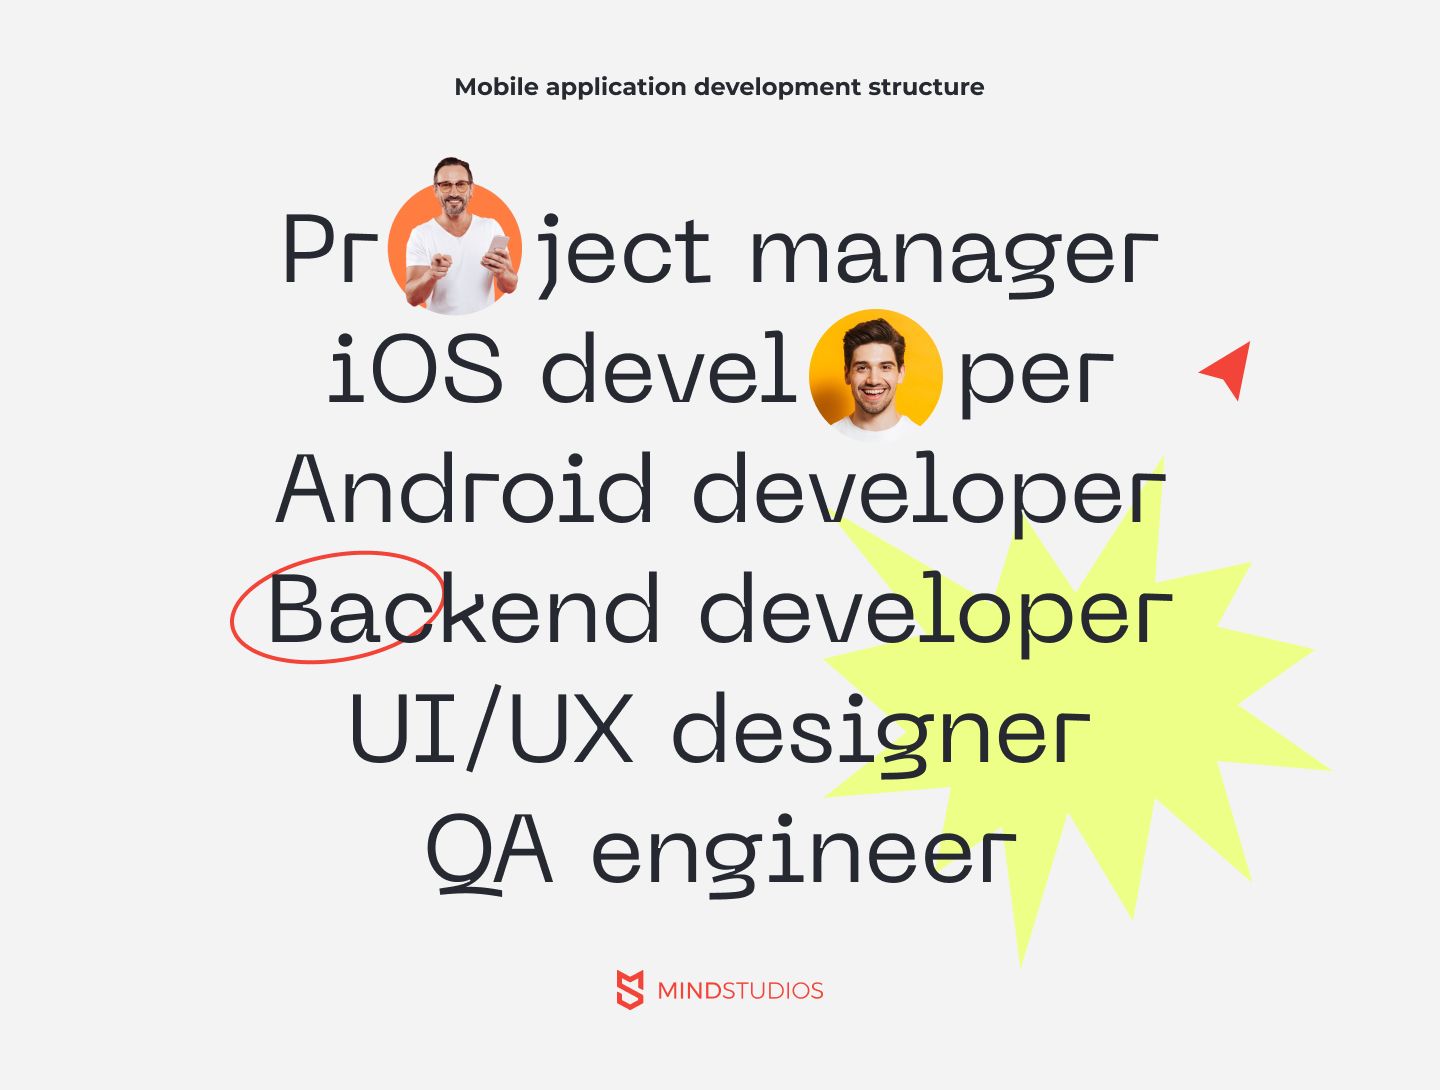 Mobile application development team structure